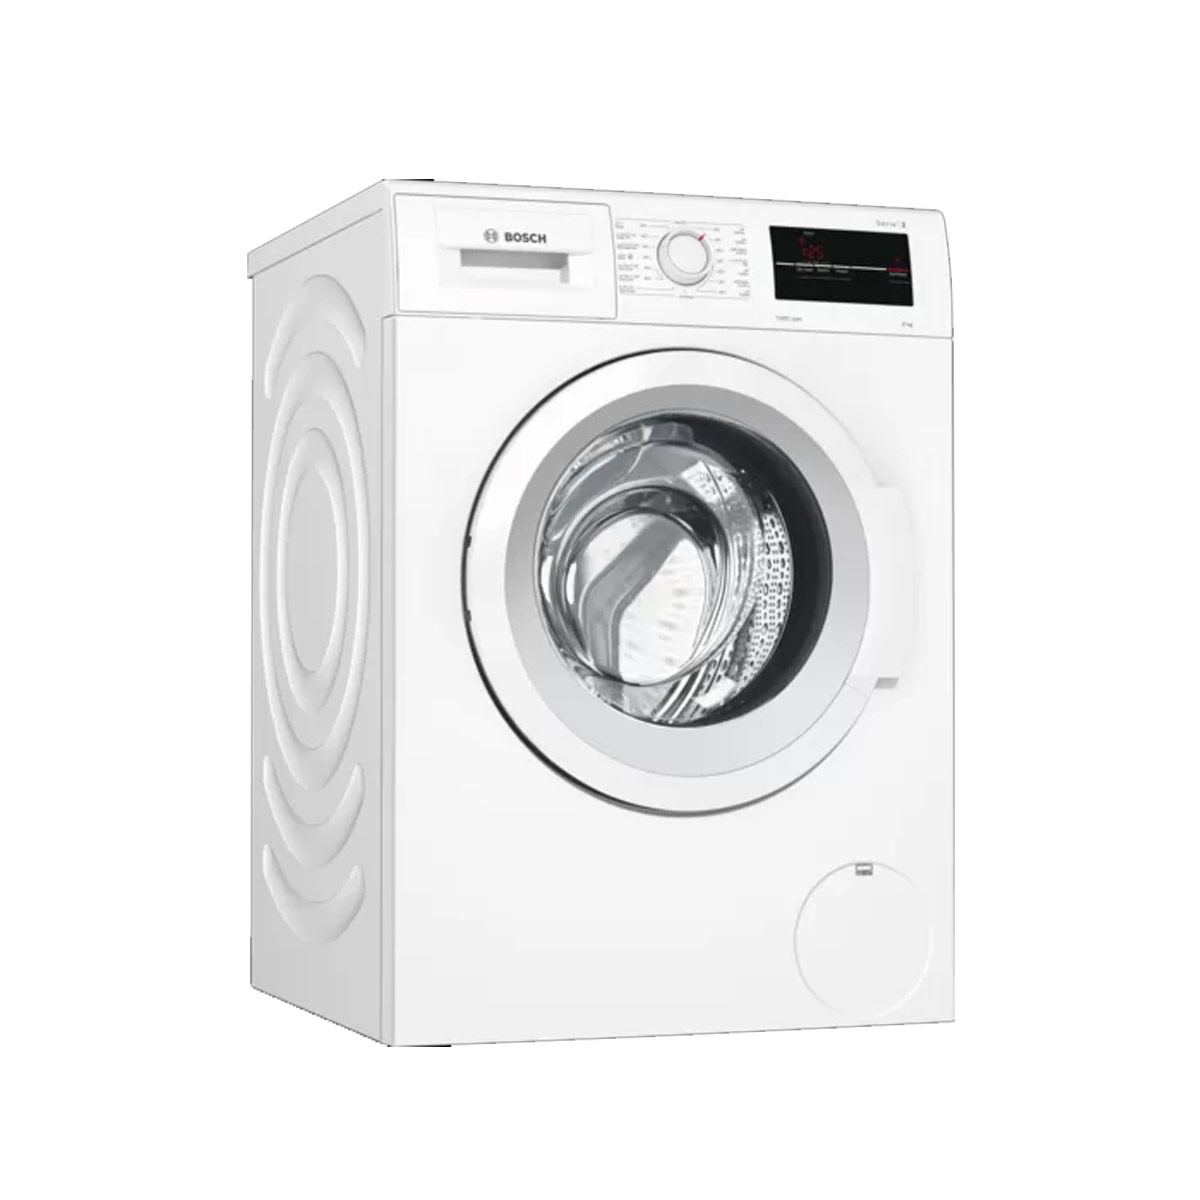 Bosch-2-Series-Front-Load-8-Kg-Washing-Machine-WAJ20180GC (3)